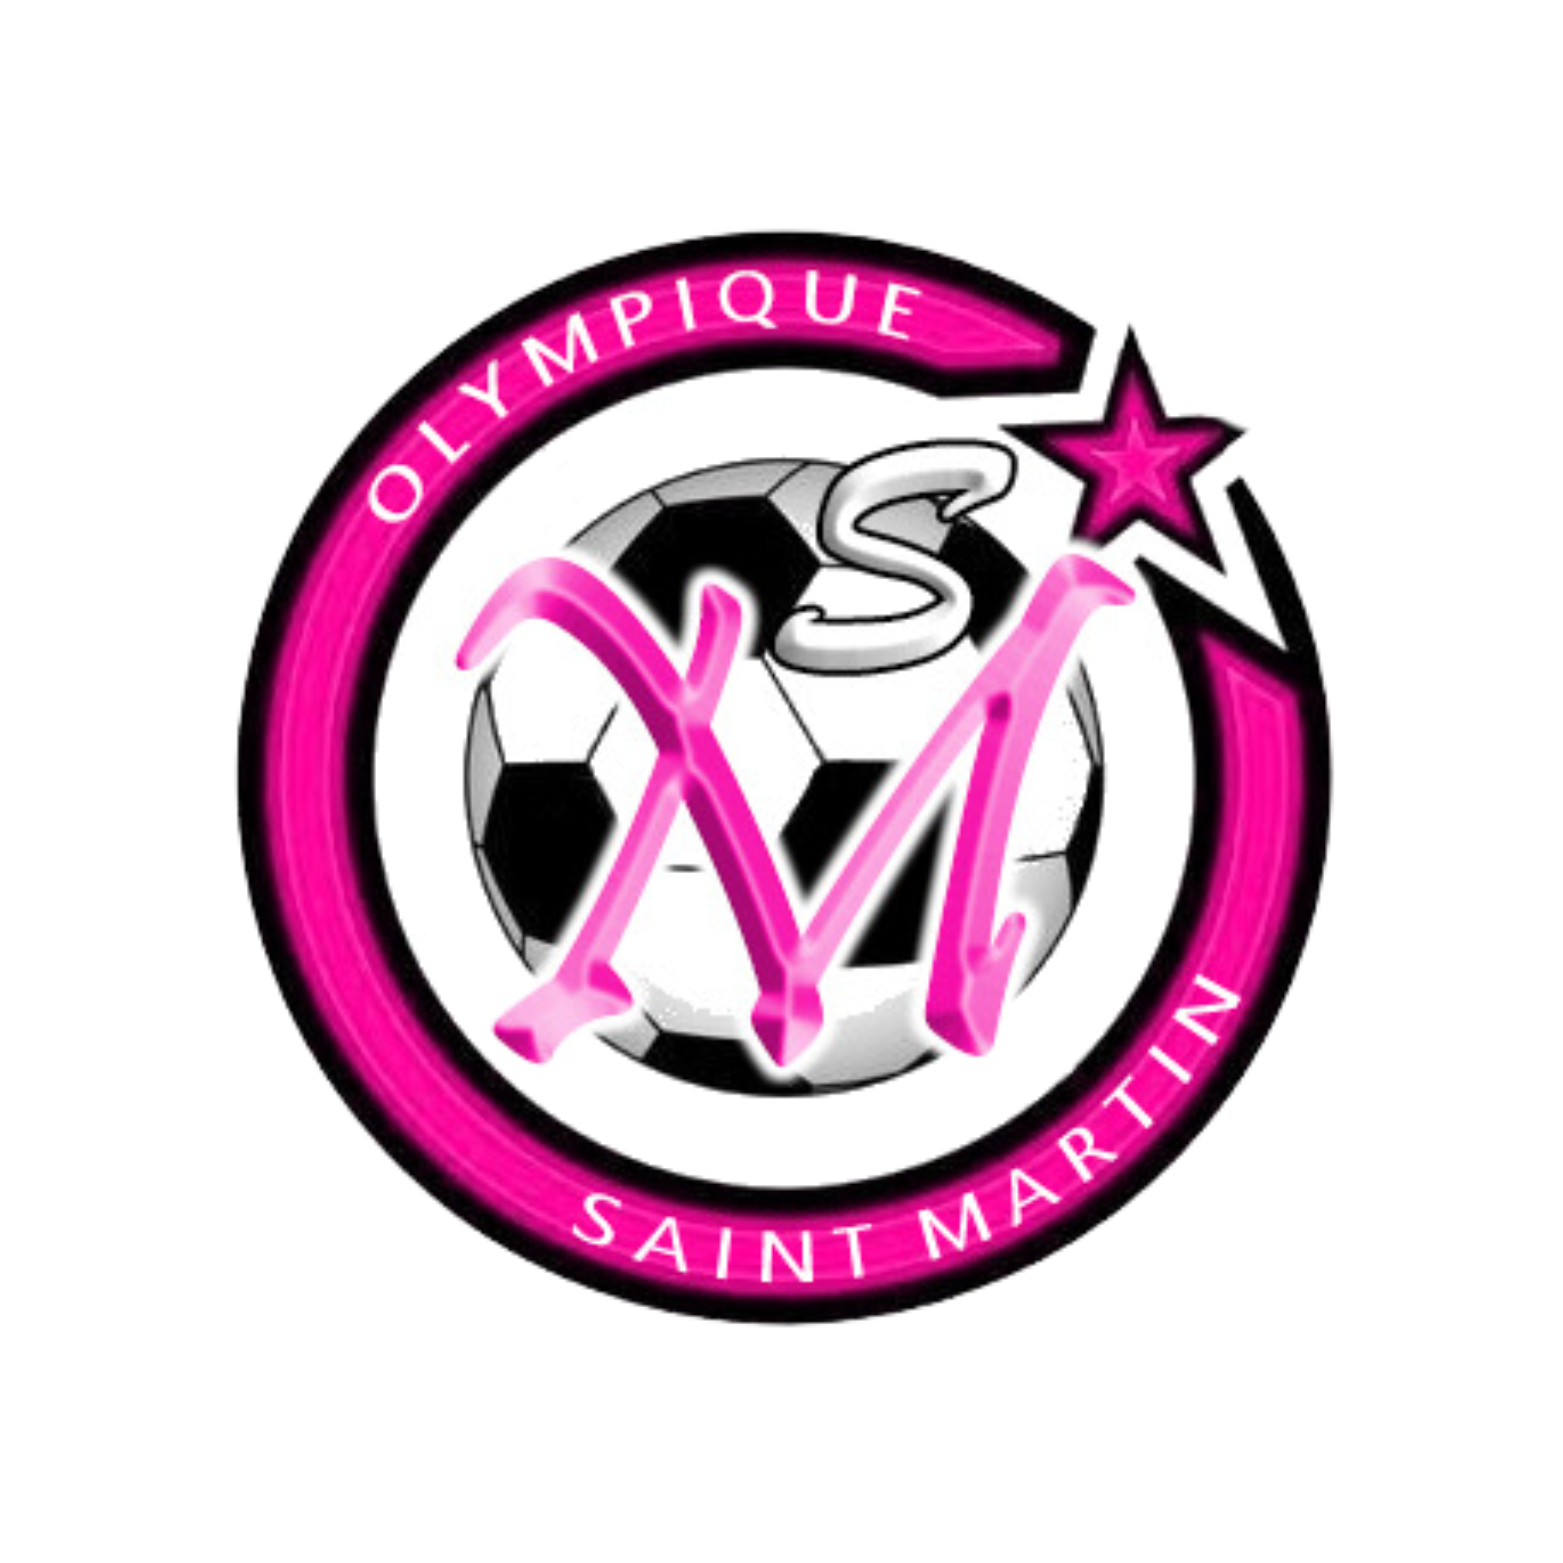 Olympique Saint Martin